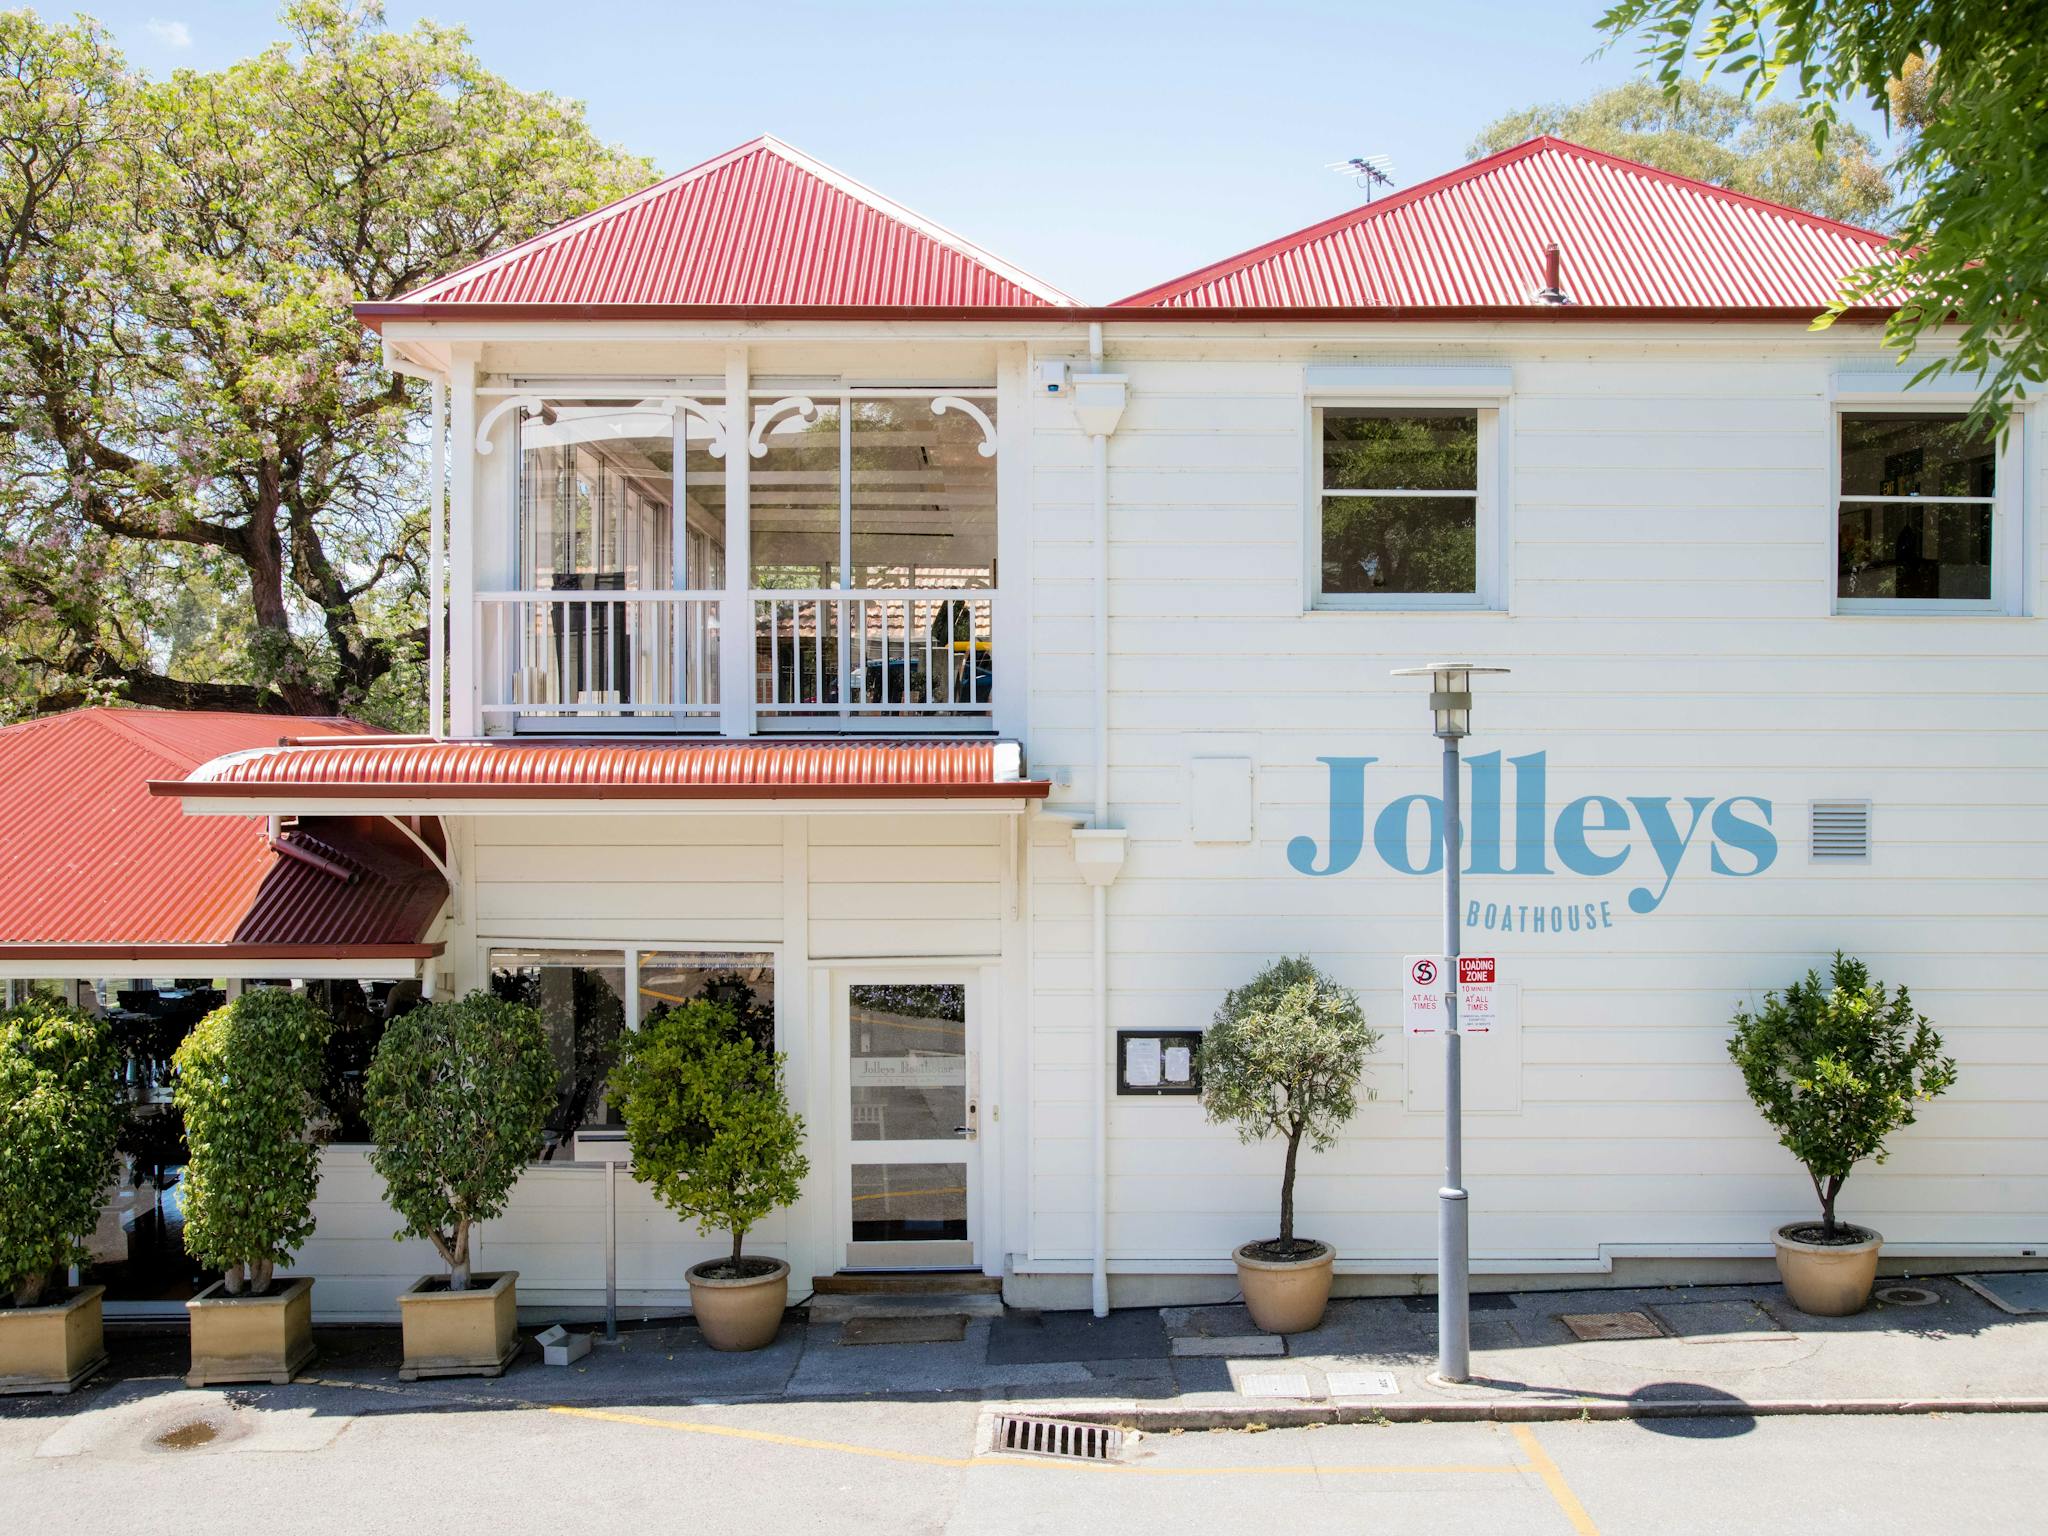 Jolleys Boathouse Restaurant Slider Image 1